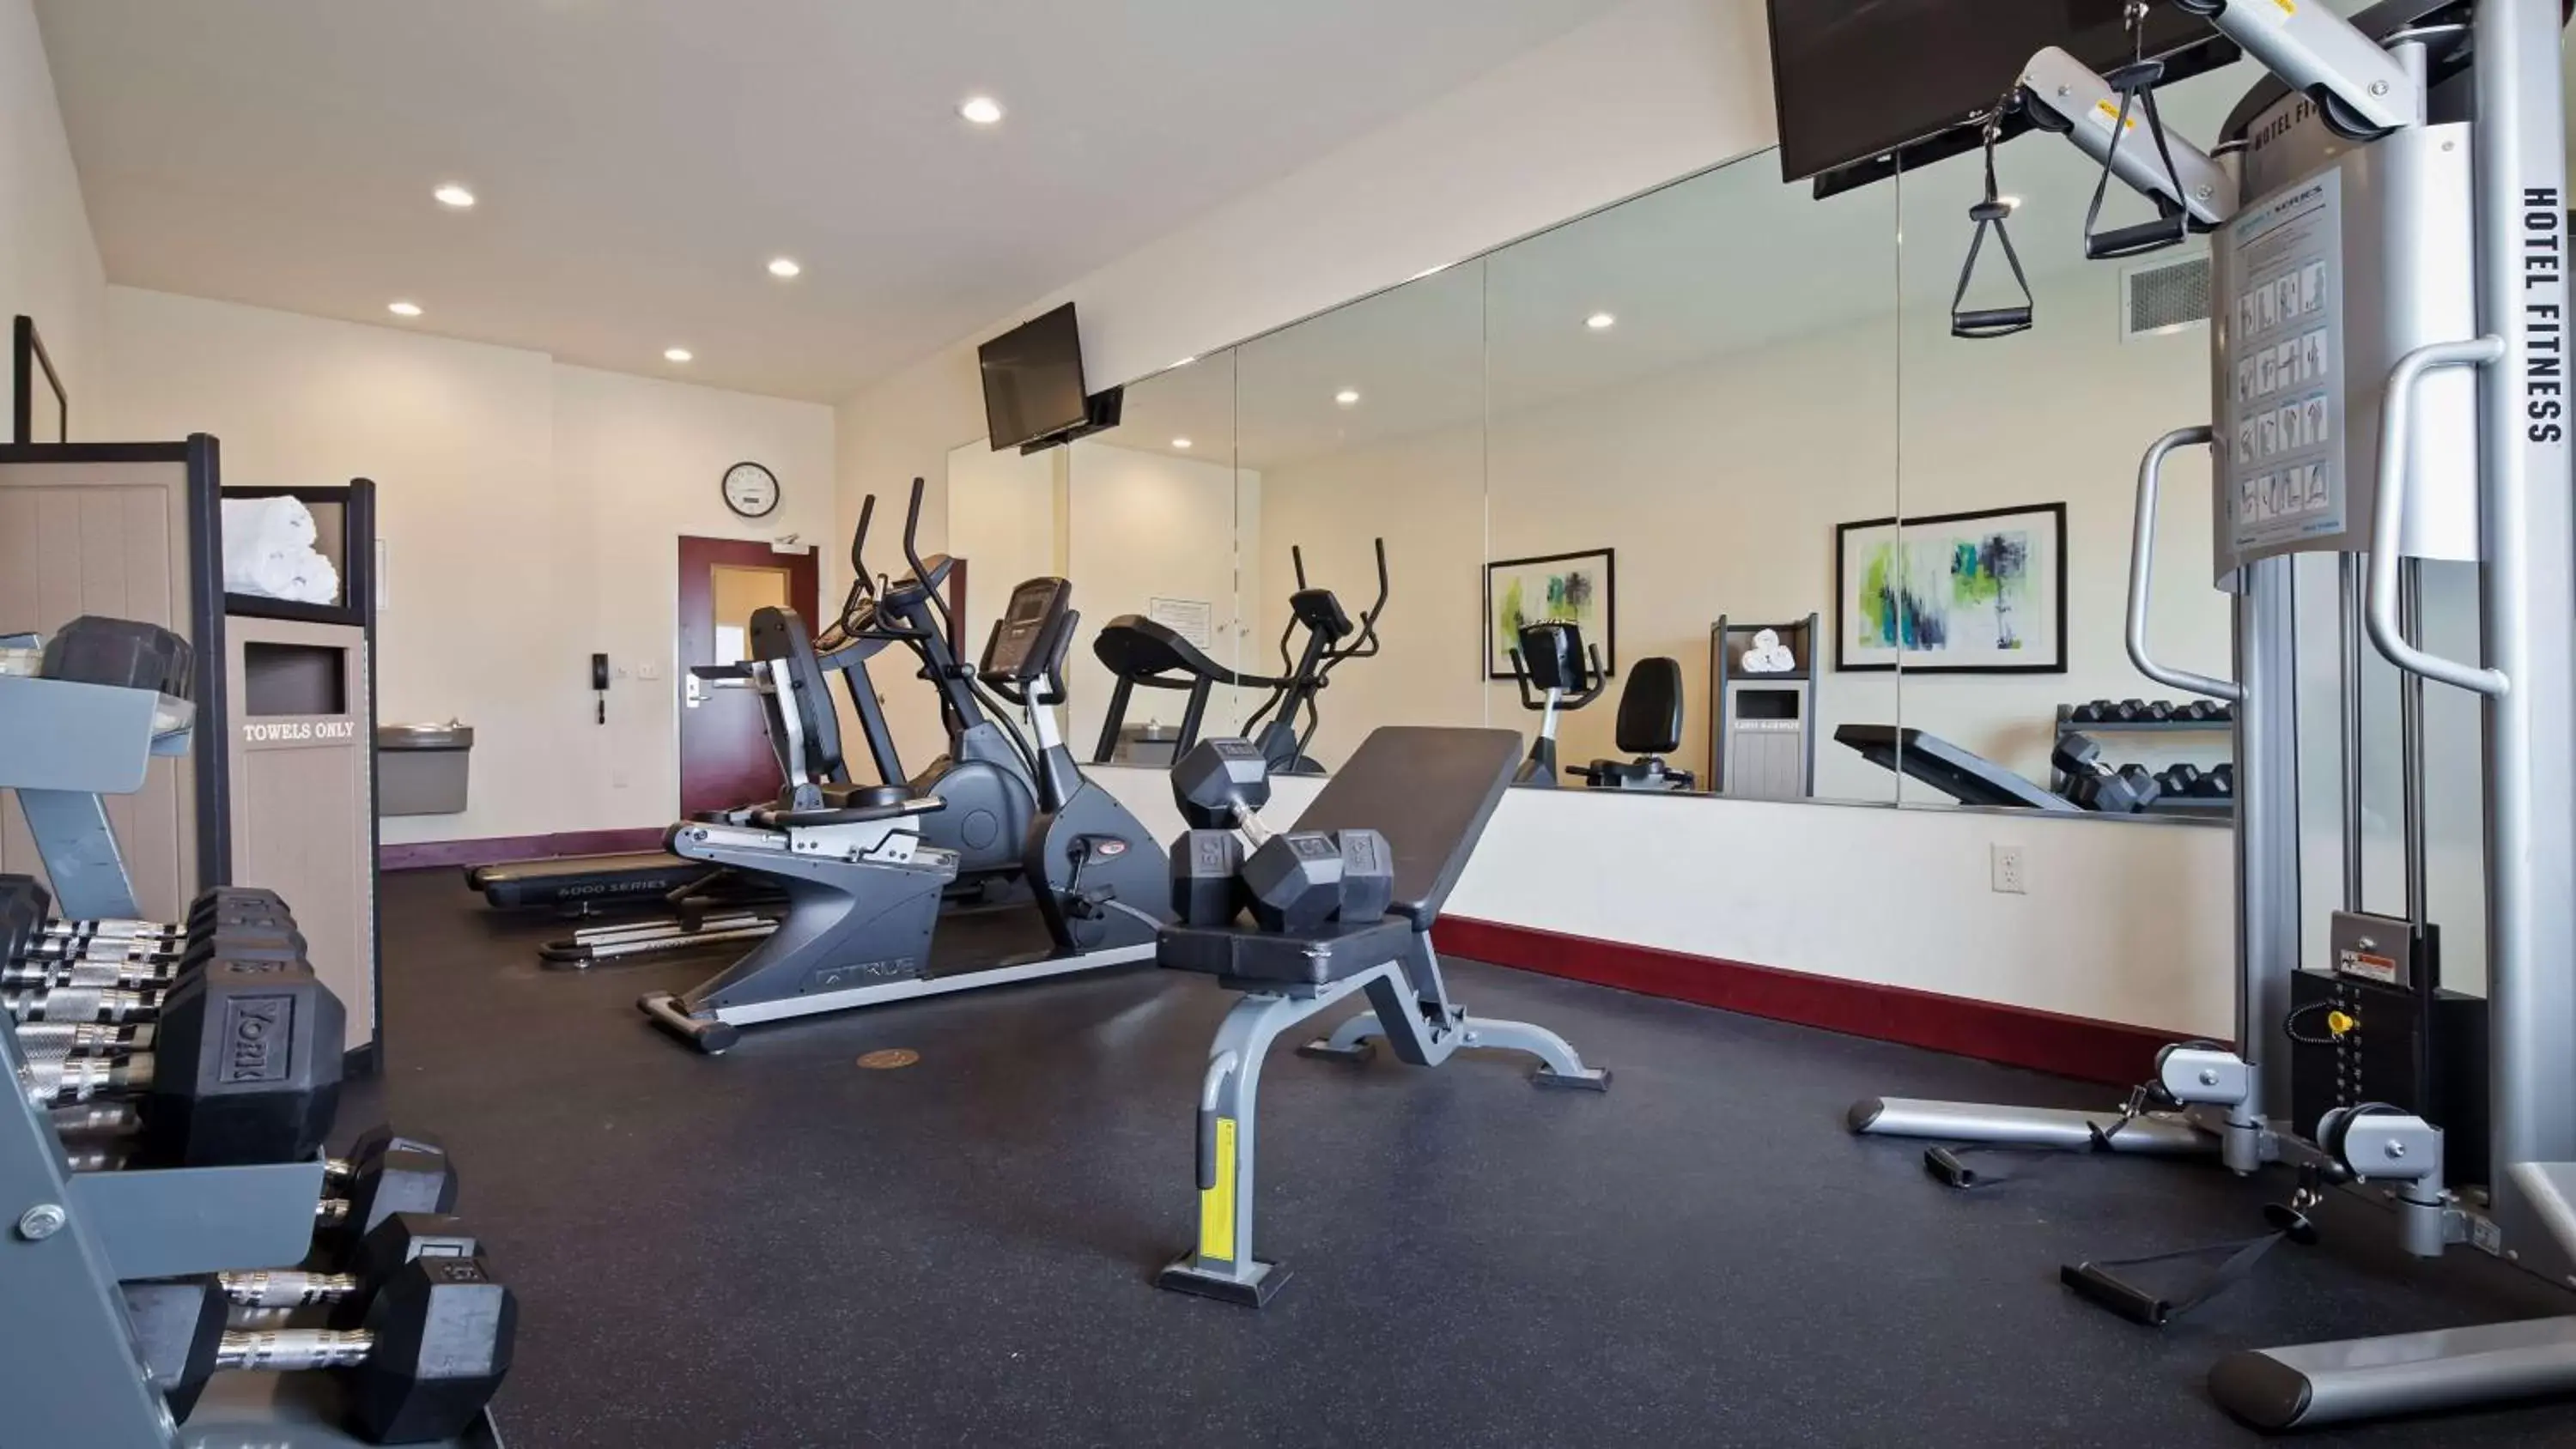 Fitness centre/facilities, Fitness Center/Facilities in Best Western Plus Pratt